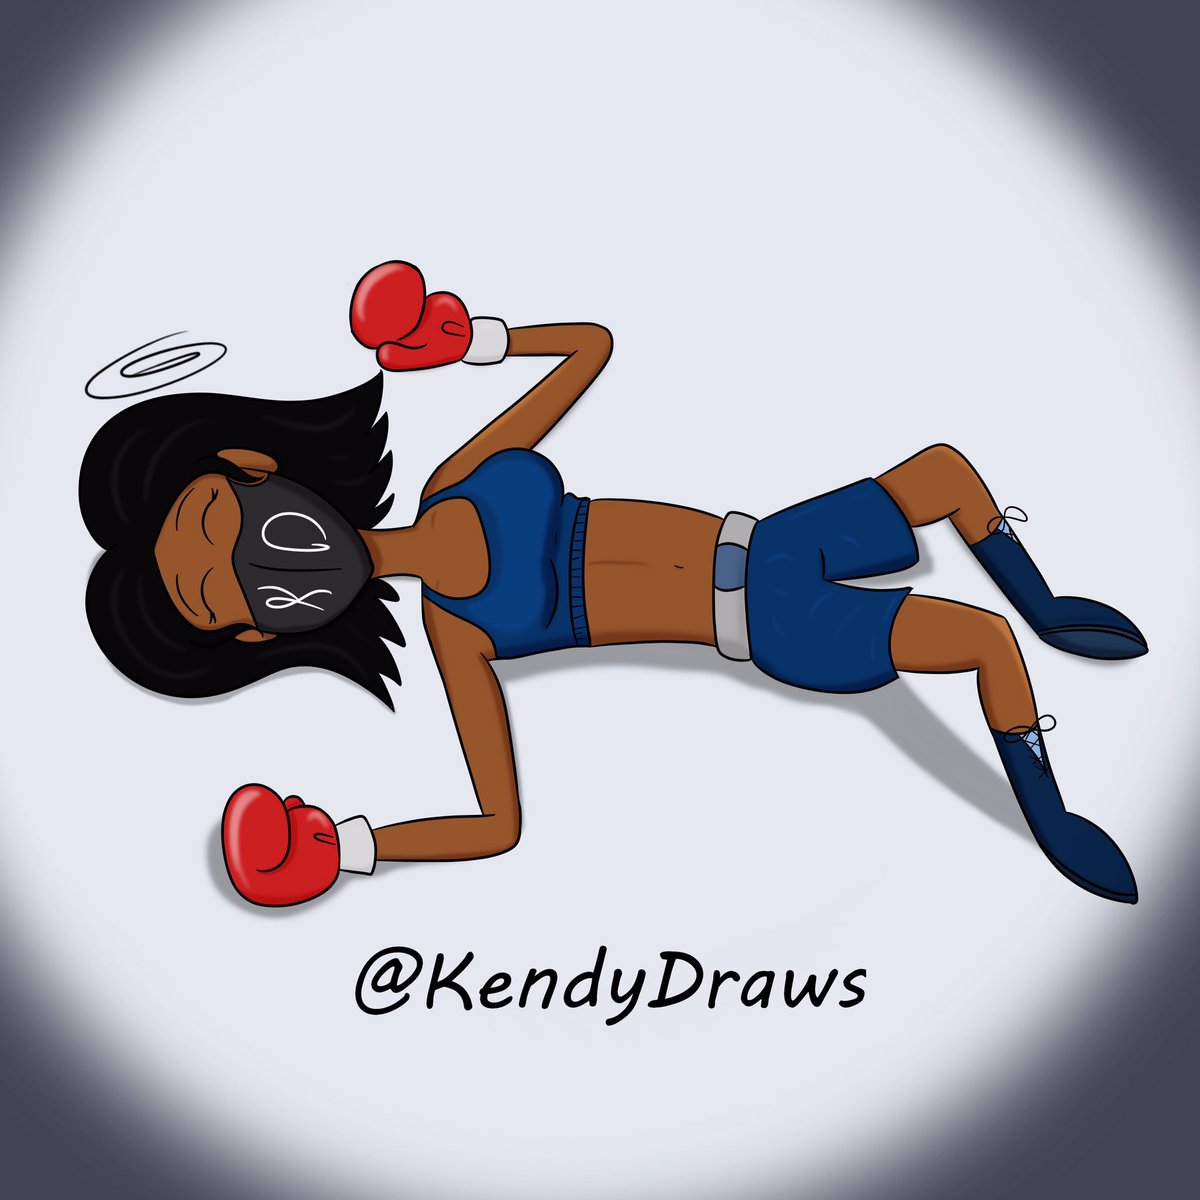 OC Kenlyn Knockout

#KendyDraws #trinidadartist #triniartist #trinidad #art #arte #artist #OC #originalart #Original #artist #artistontwittter #OCKenlyn #Kenlyn #genderbend #drawings #boxing #ボクシング #女子ボクシング #knockout #KO